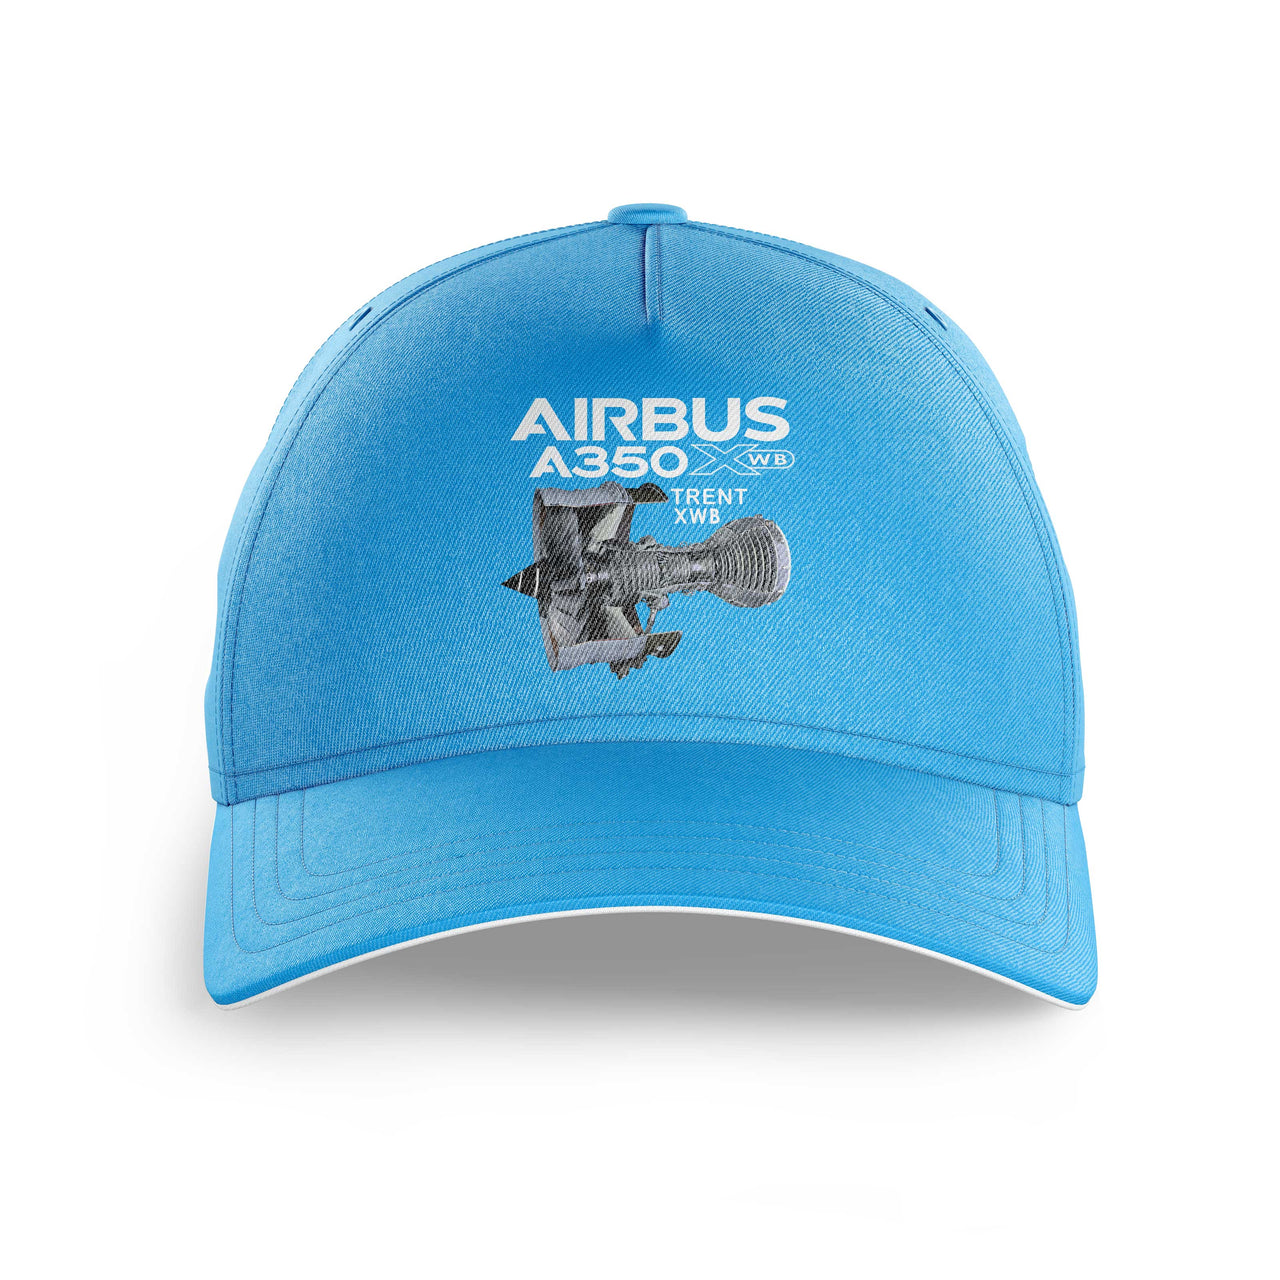 Airbus A350 & Trent XWB Engine Printed Hats